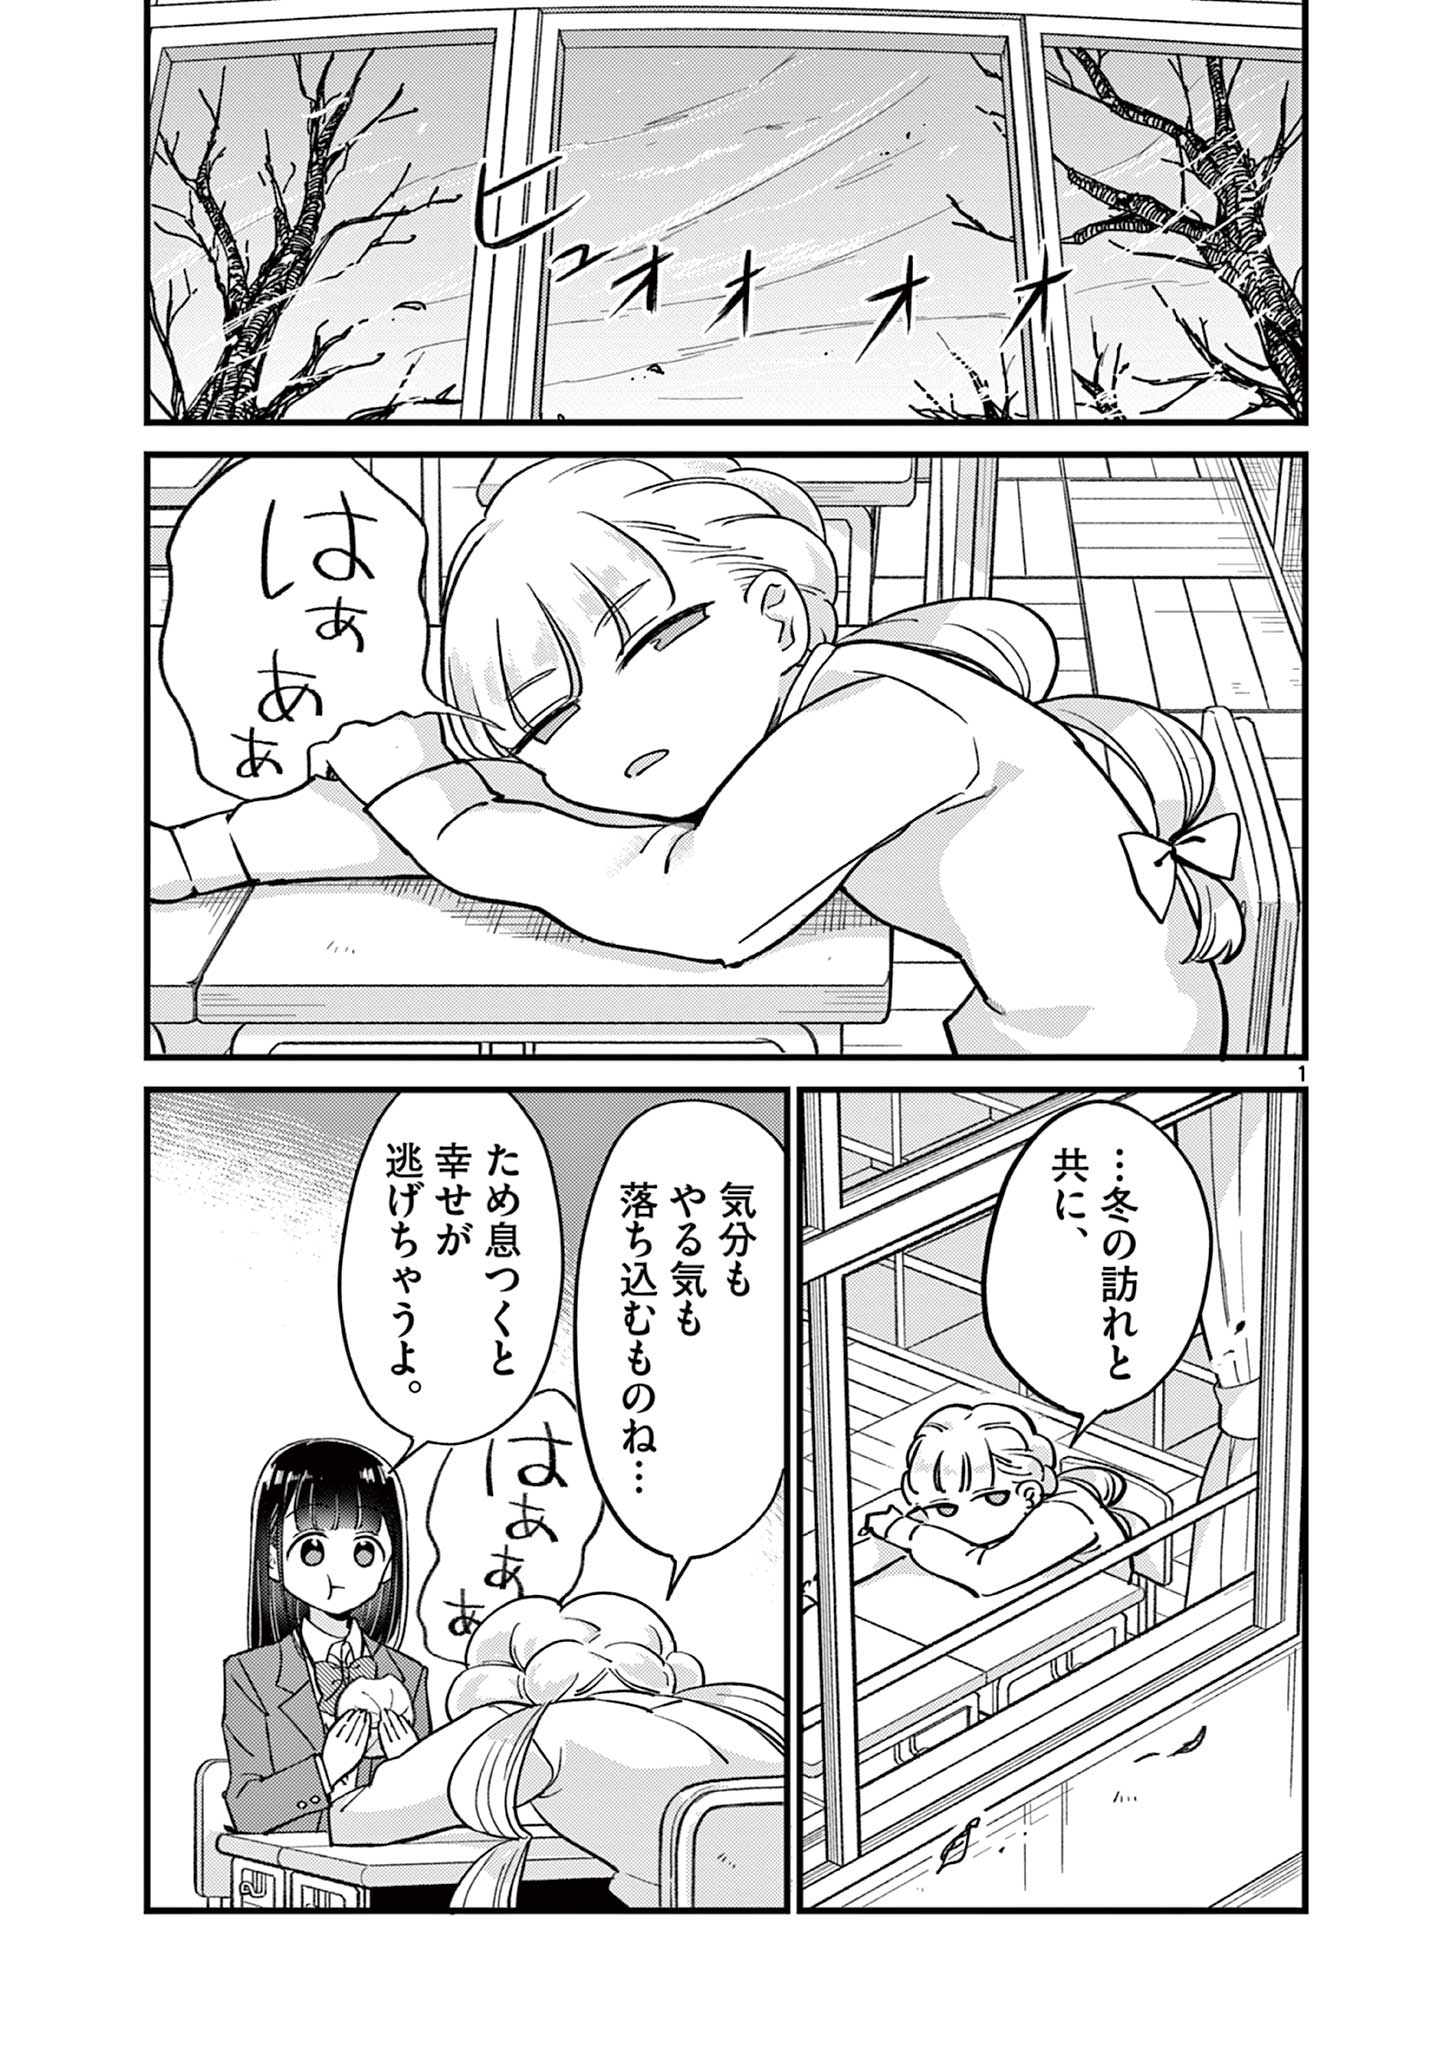 Ranka-chan wa Bitch ni Naritai - Chapter 15 - Page 1